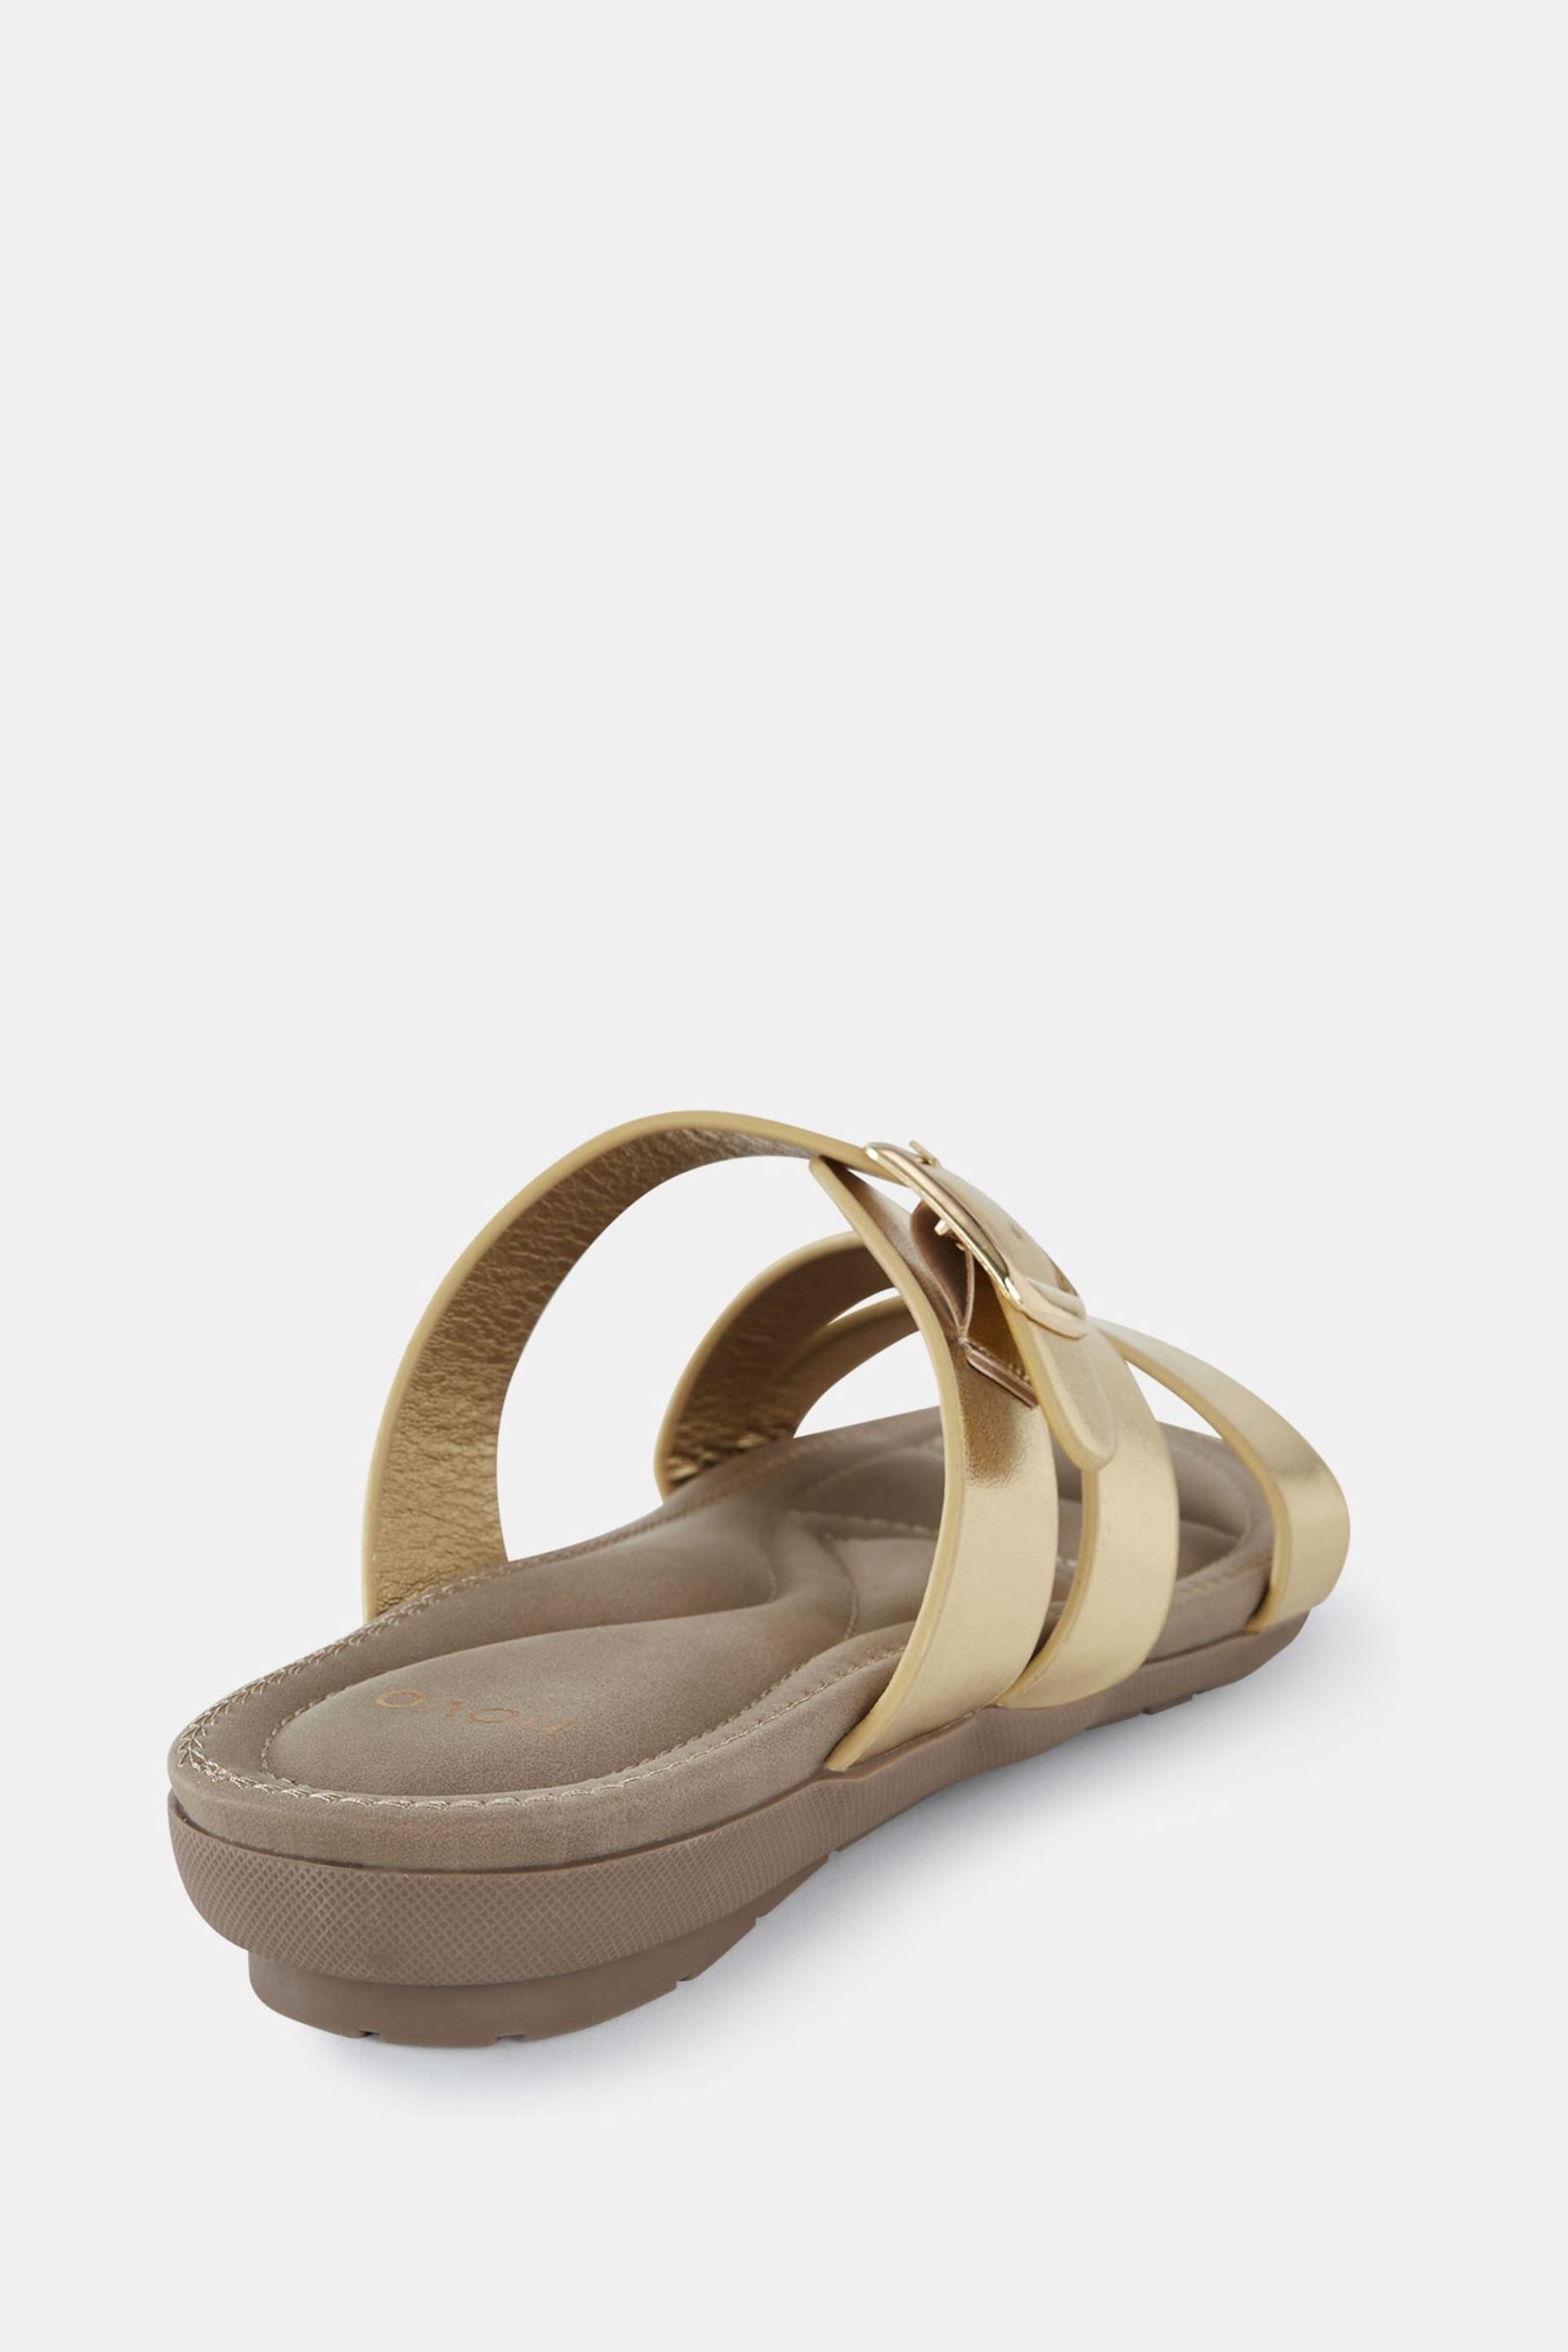 Novo Gold Tia Strappy Mule Sandals - Image 4 of 6